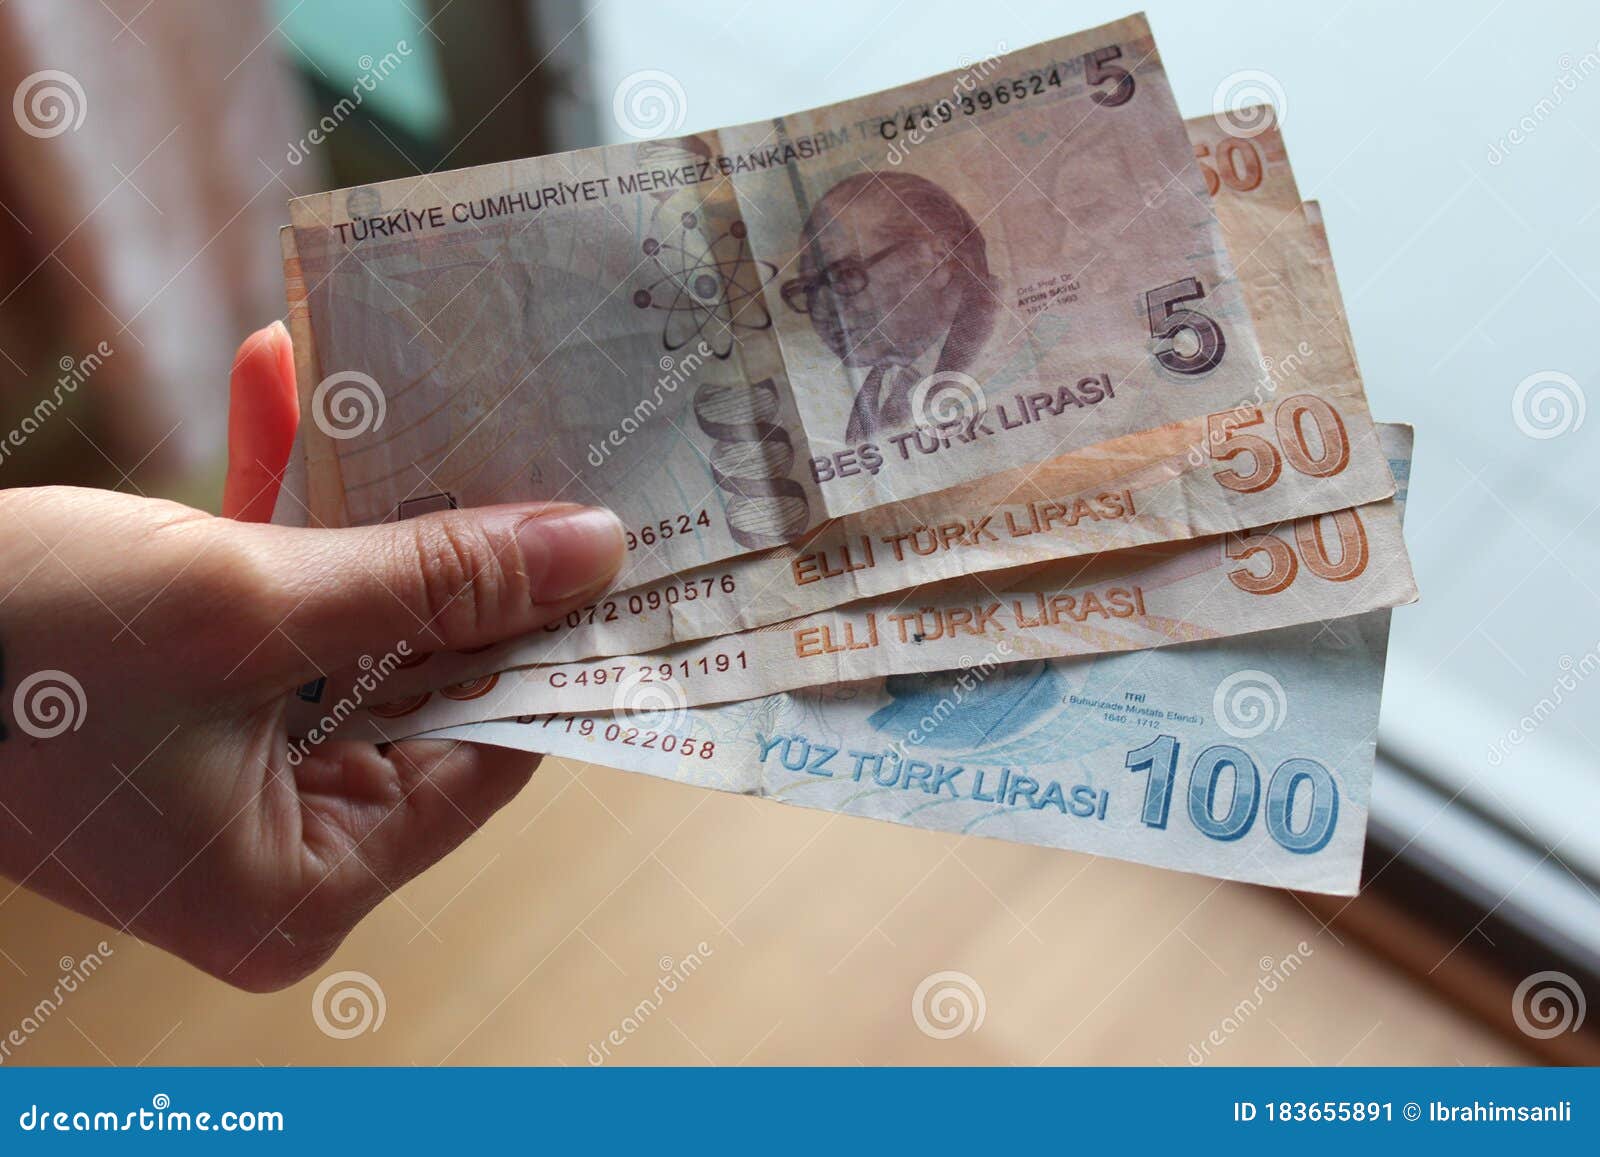 turkish lira banknotes payment